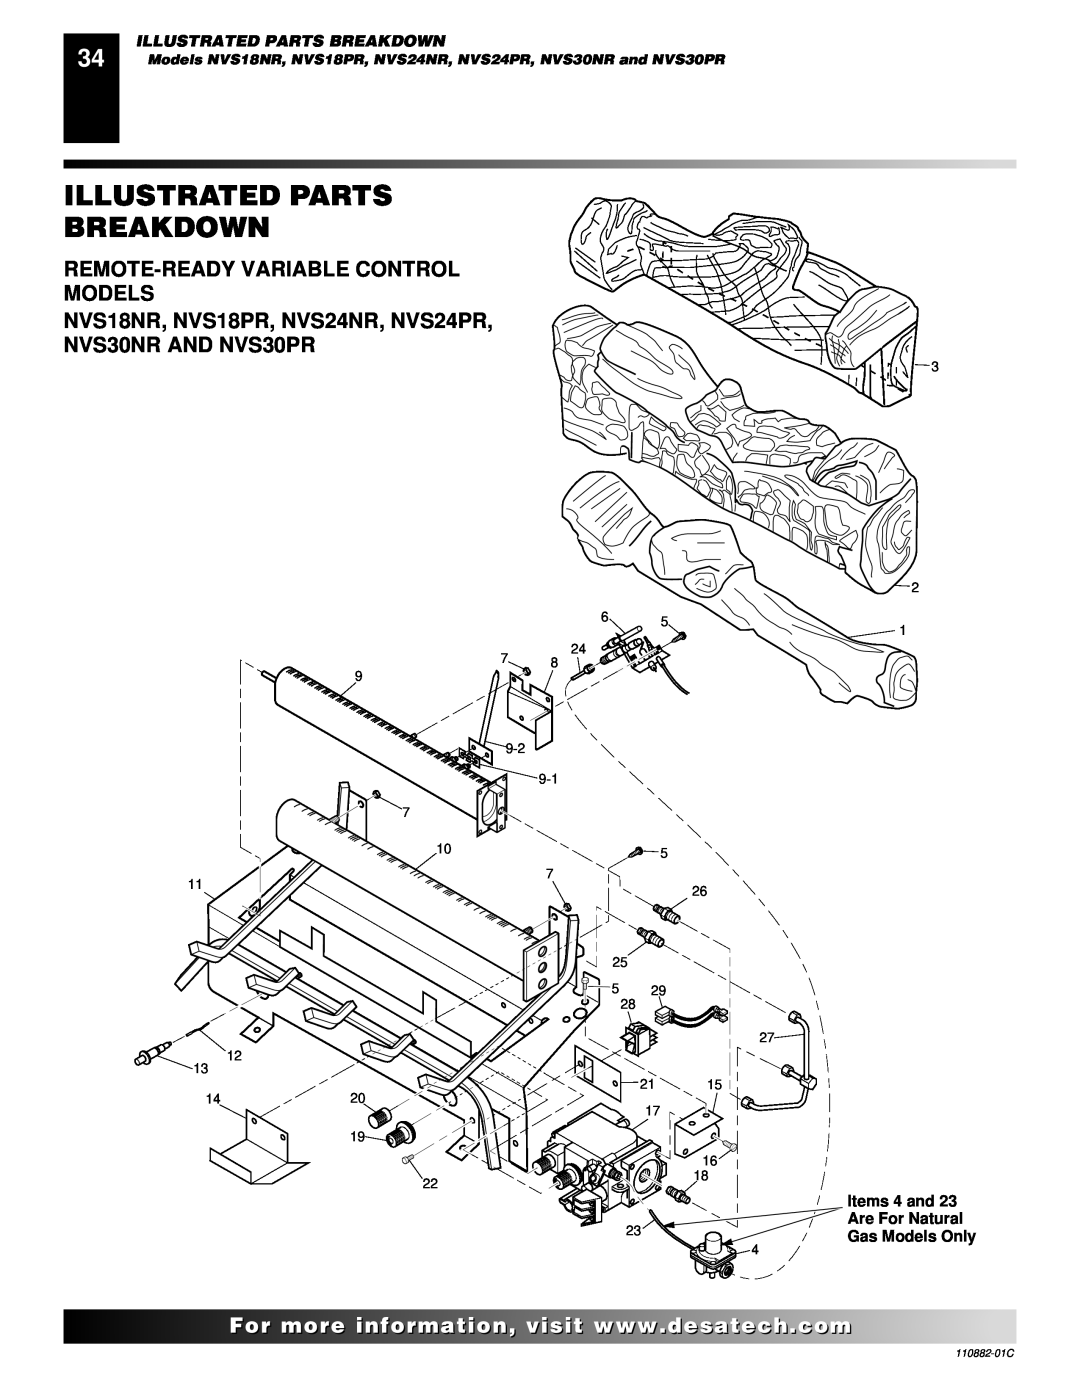 Desa 30 Illustrated Parts Breakdown, Remote-Readyvariable Control Models, NVS18NR, NVS18PR, NVS24NR, NVS24PR, Items 4 and 